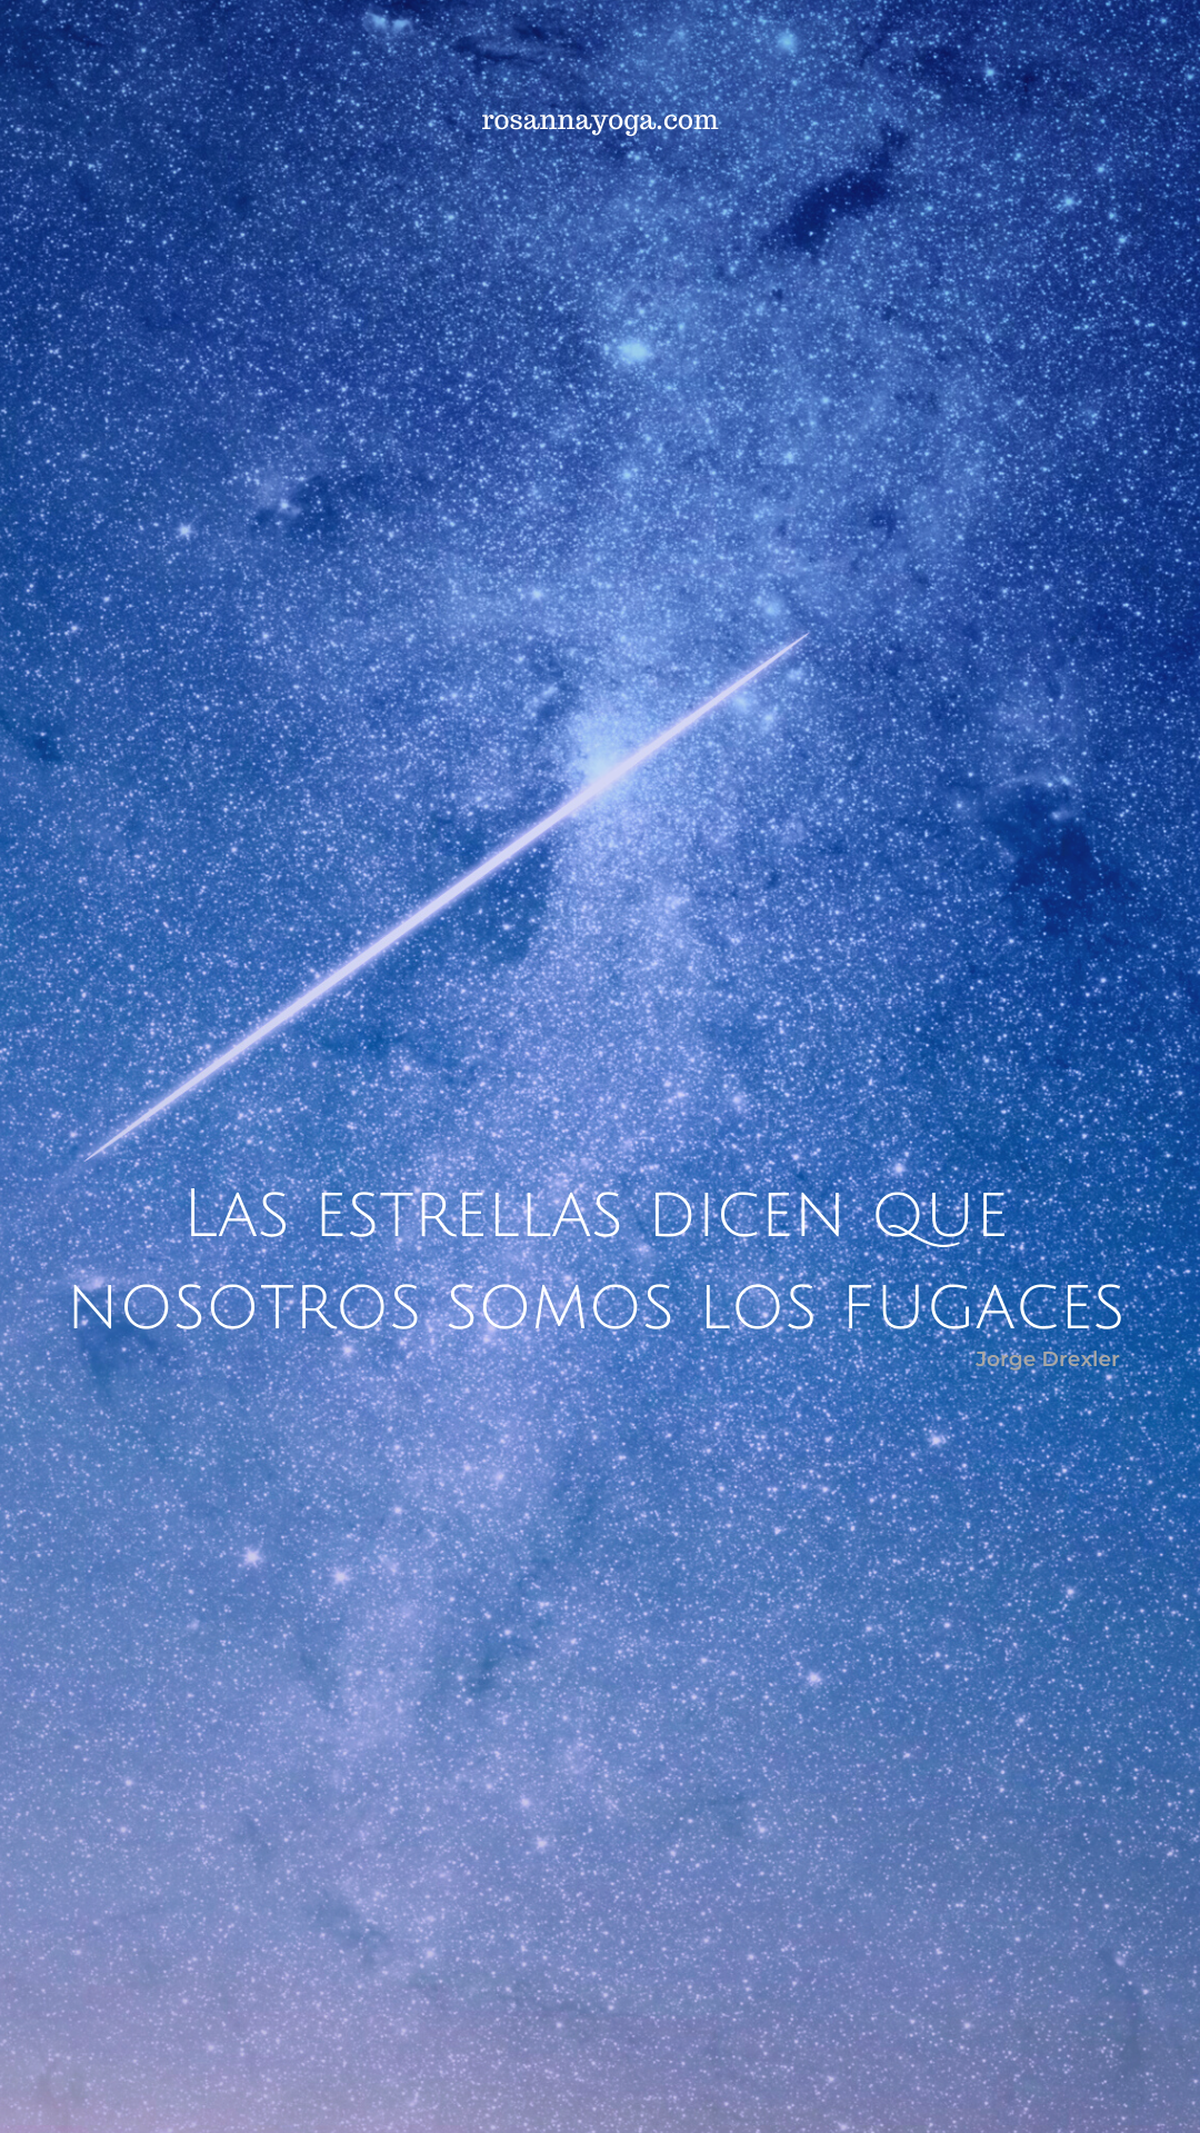 Estrellas by Jorge Drexler